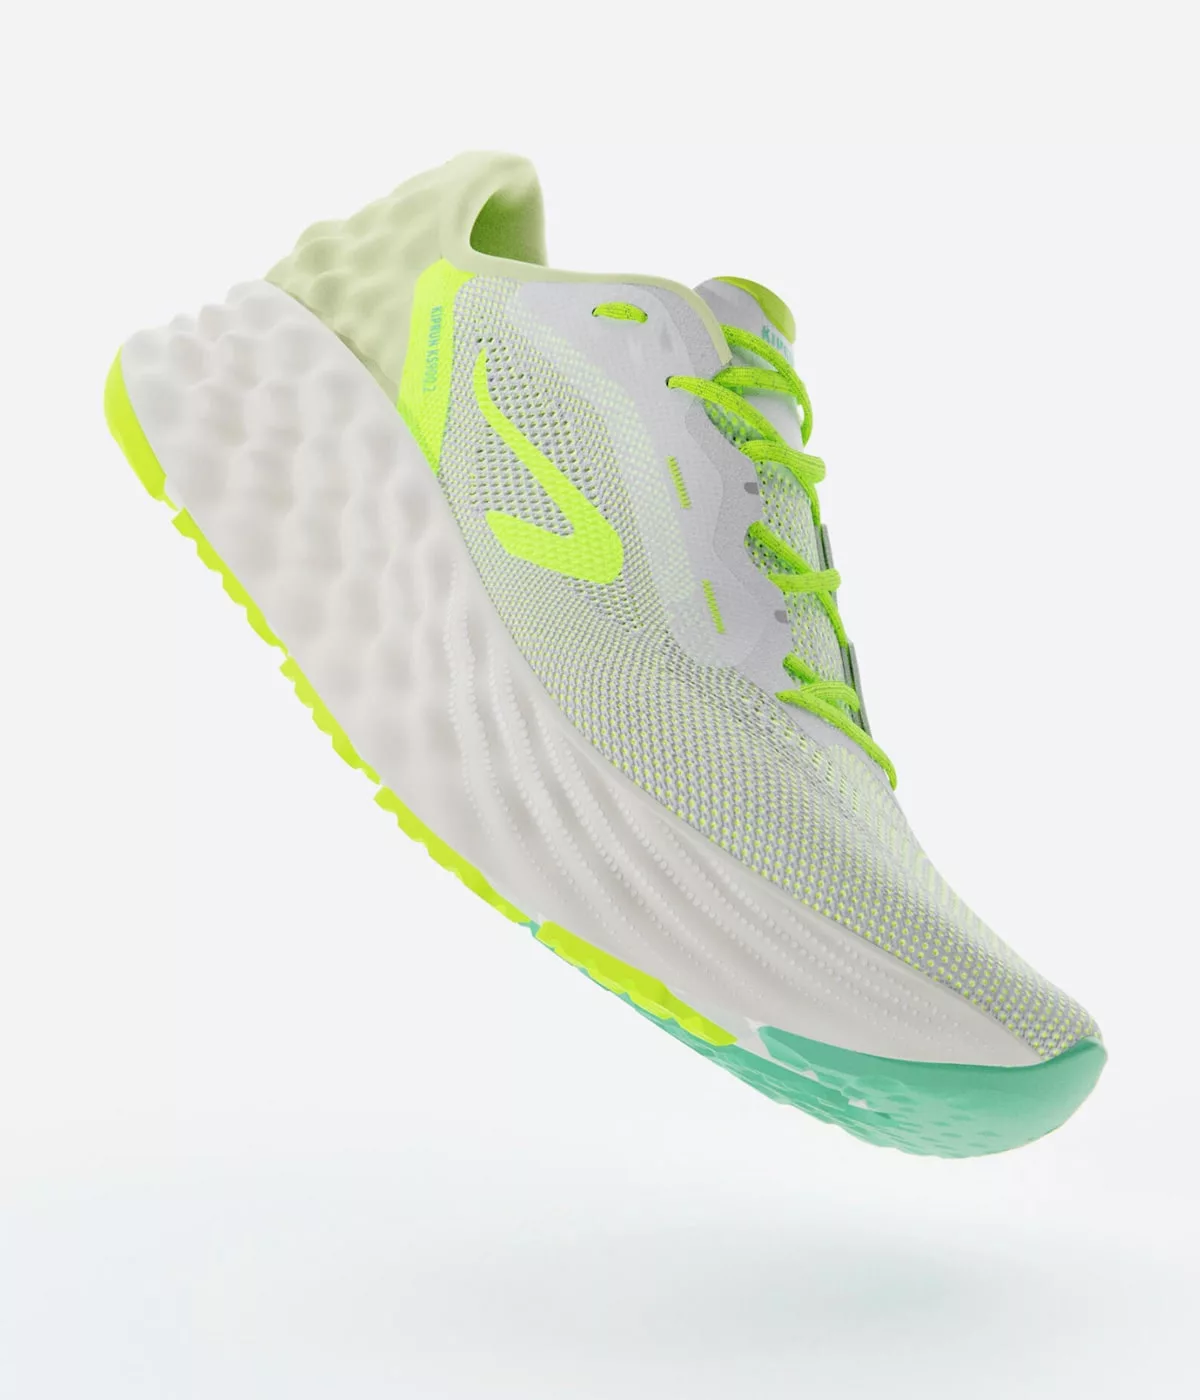 Chaussure de sport grise et vert fluo